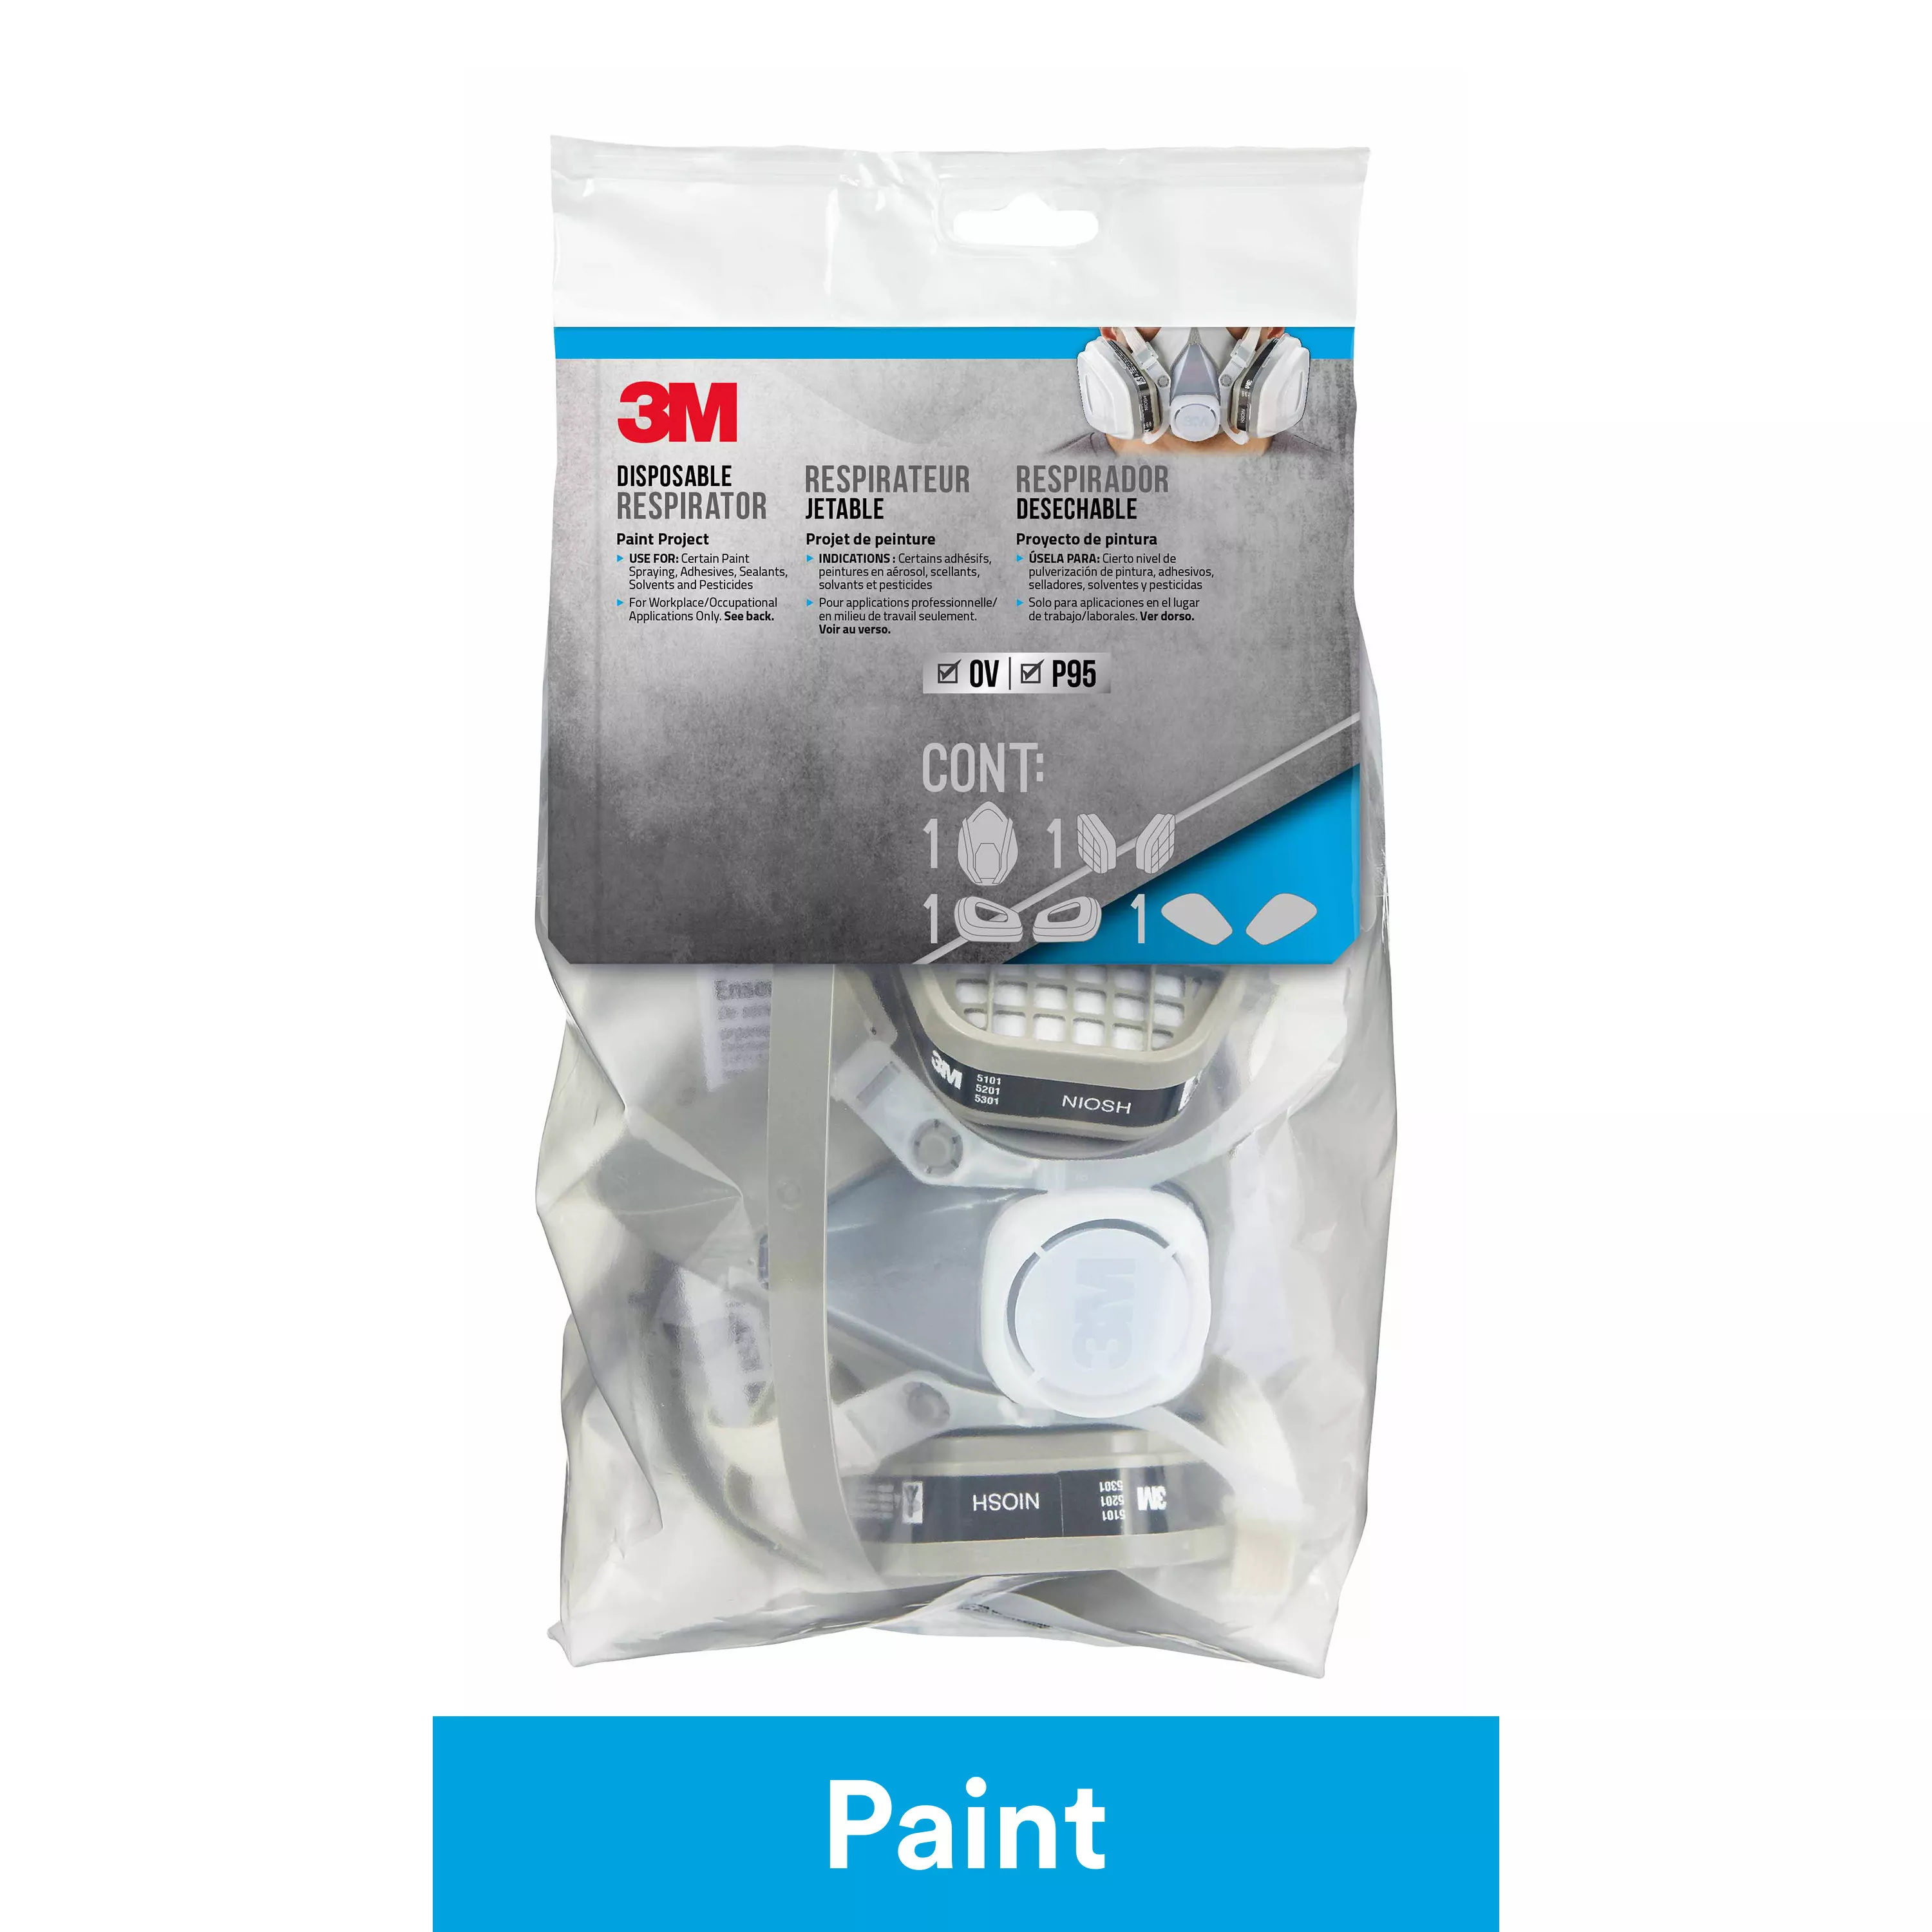 3M™ Disposable Paint Project Respirator, OV/P95, 52P71P1-C, Medium, 1
each/pack, 6 packs/case